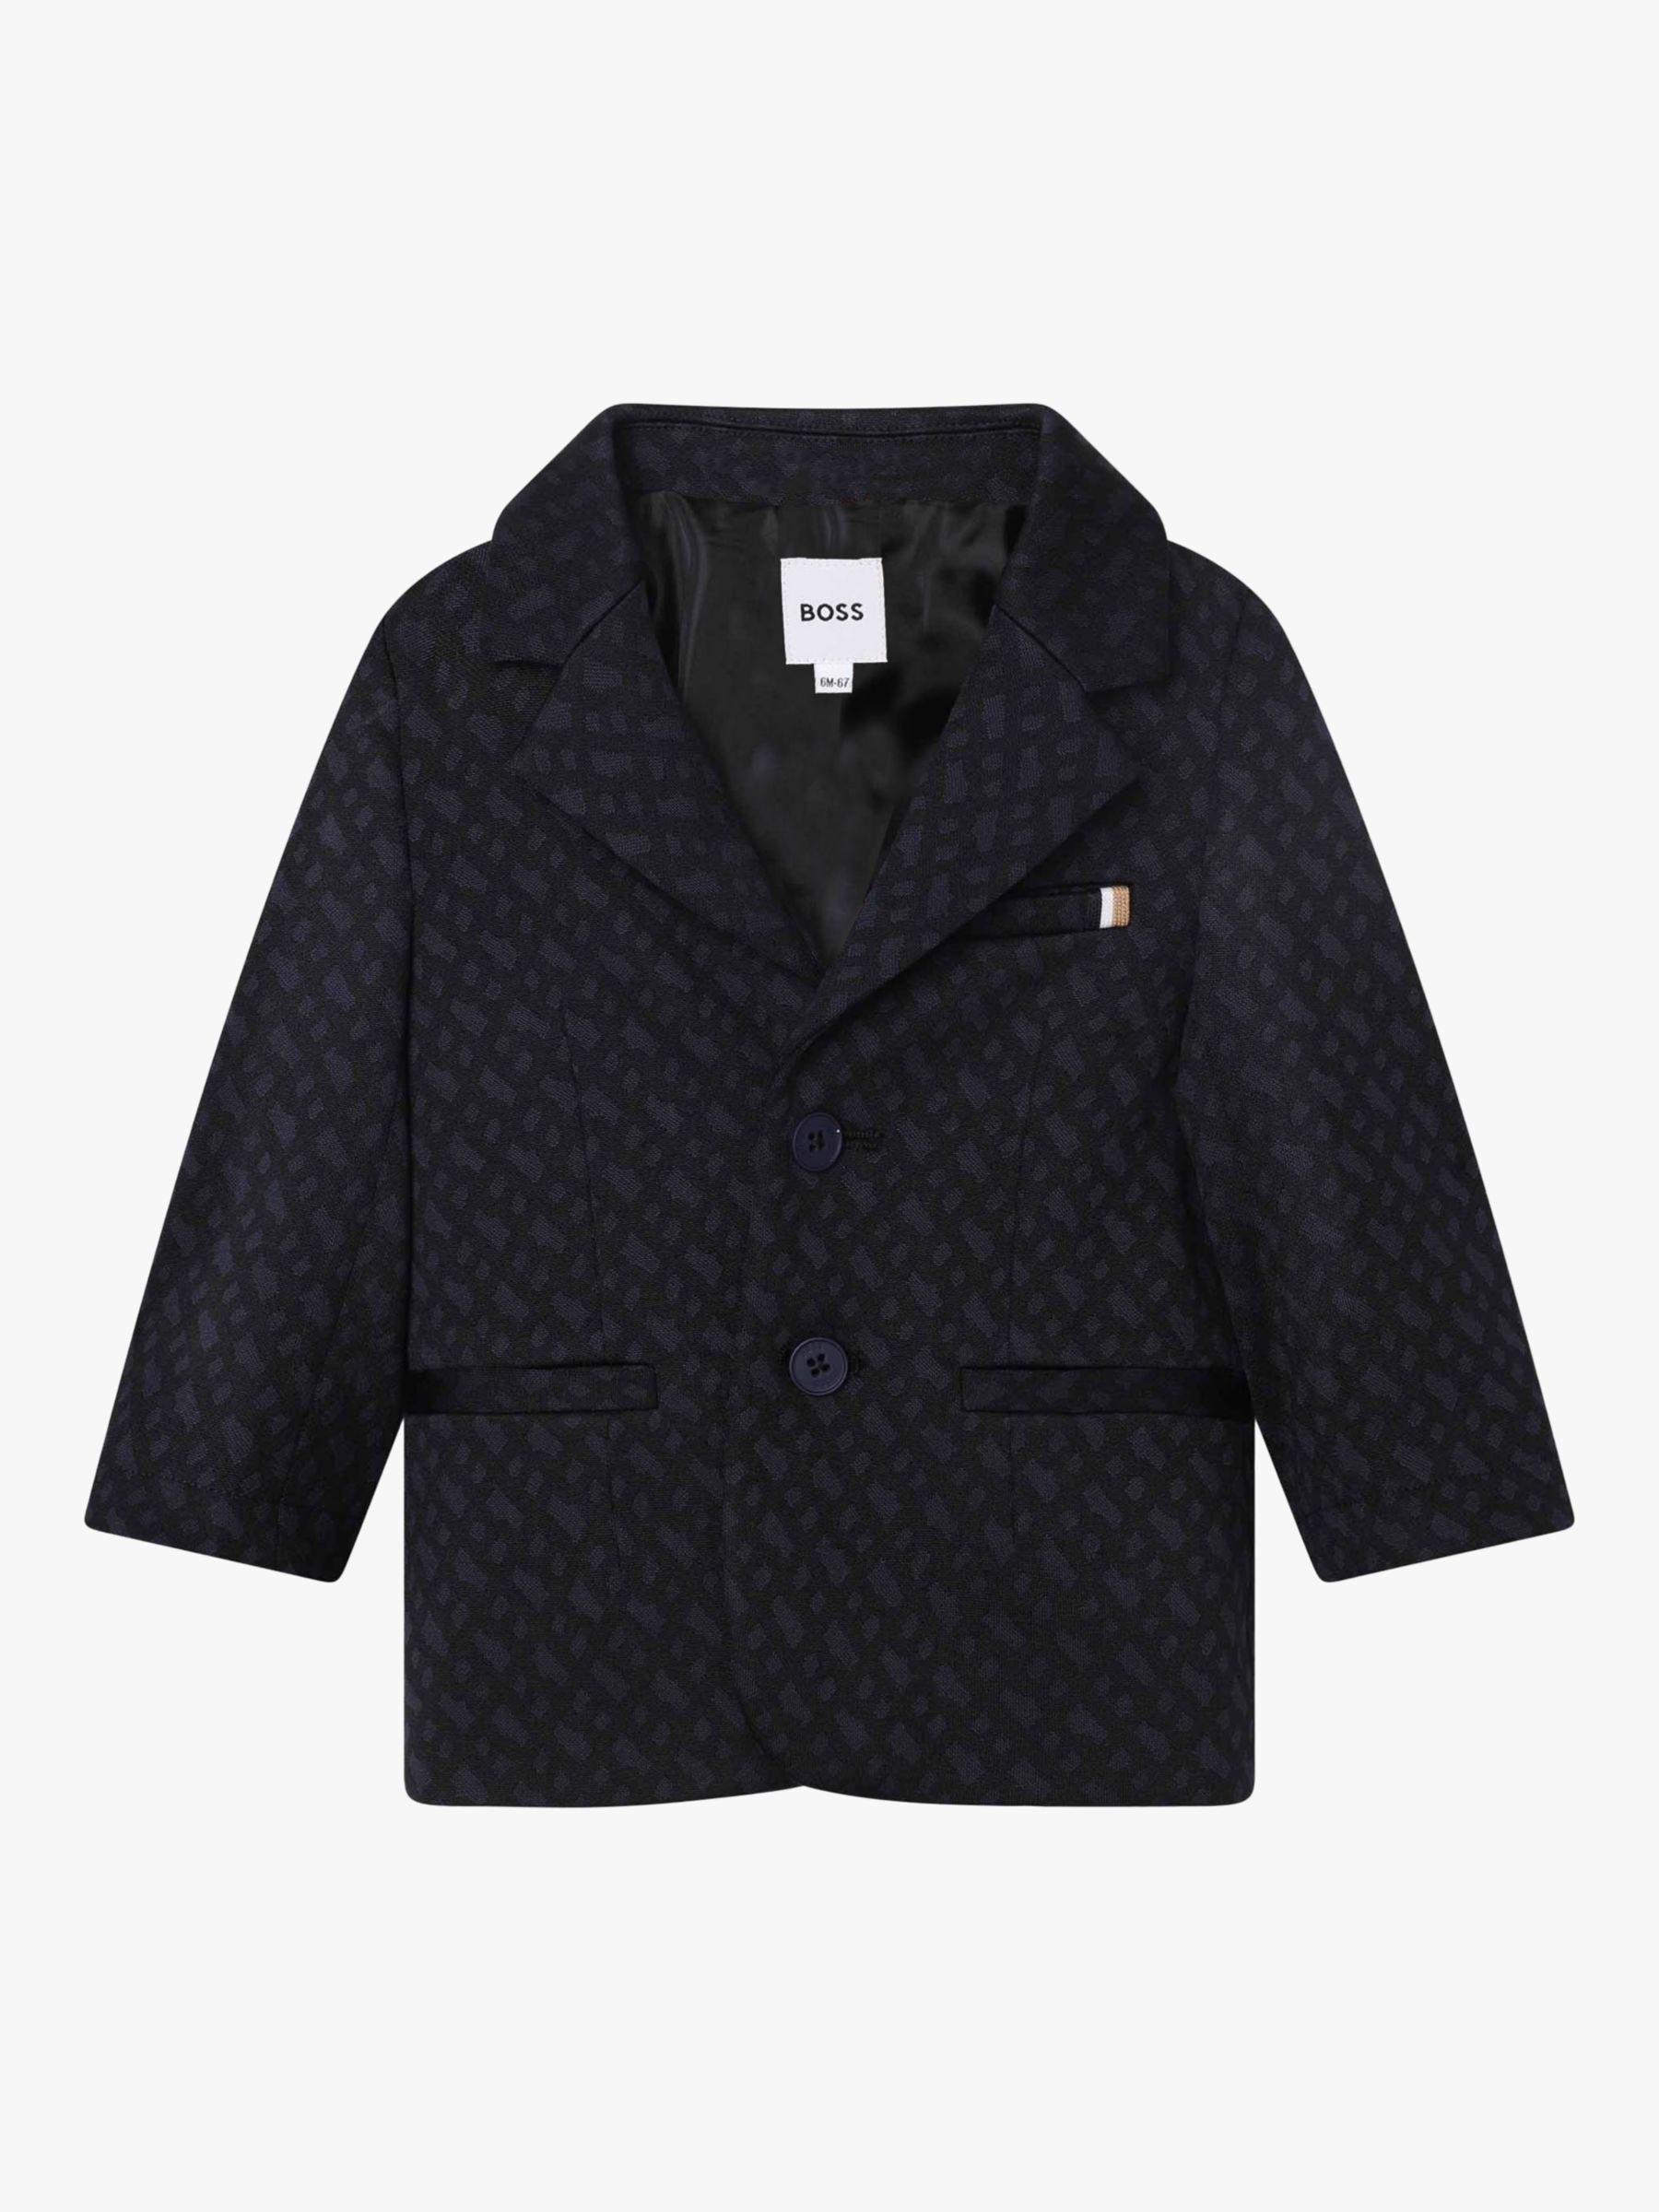 Buy BOSS Baby Jacquard Monogram Jacket & Trousers Set, Navy Online at johnlewis.com